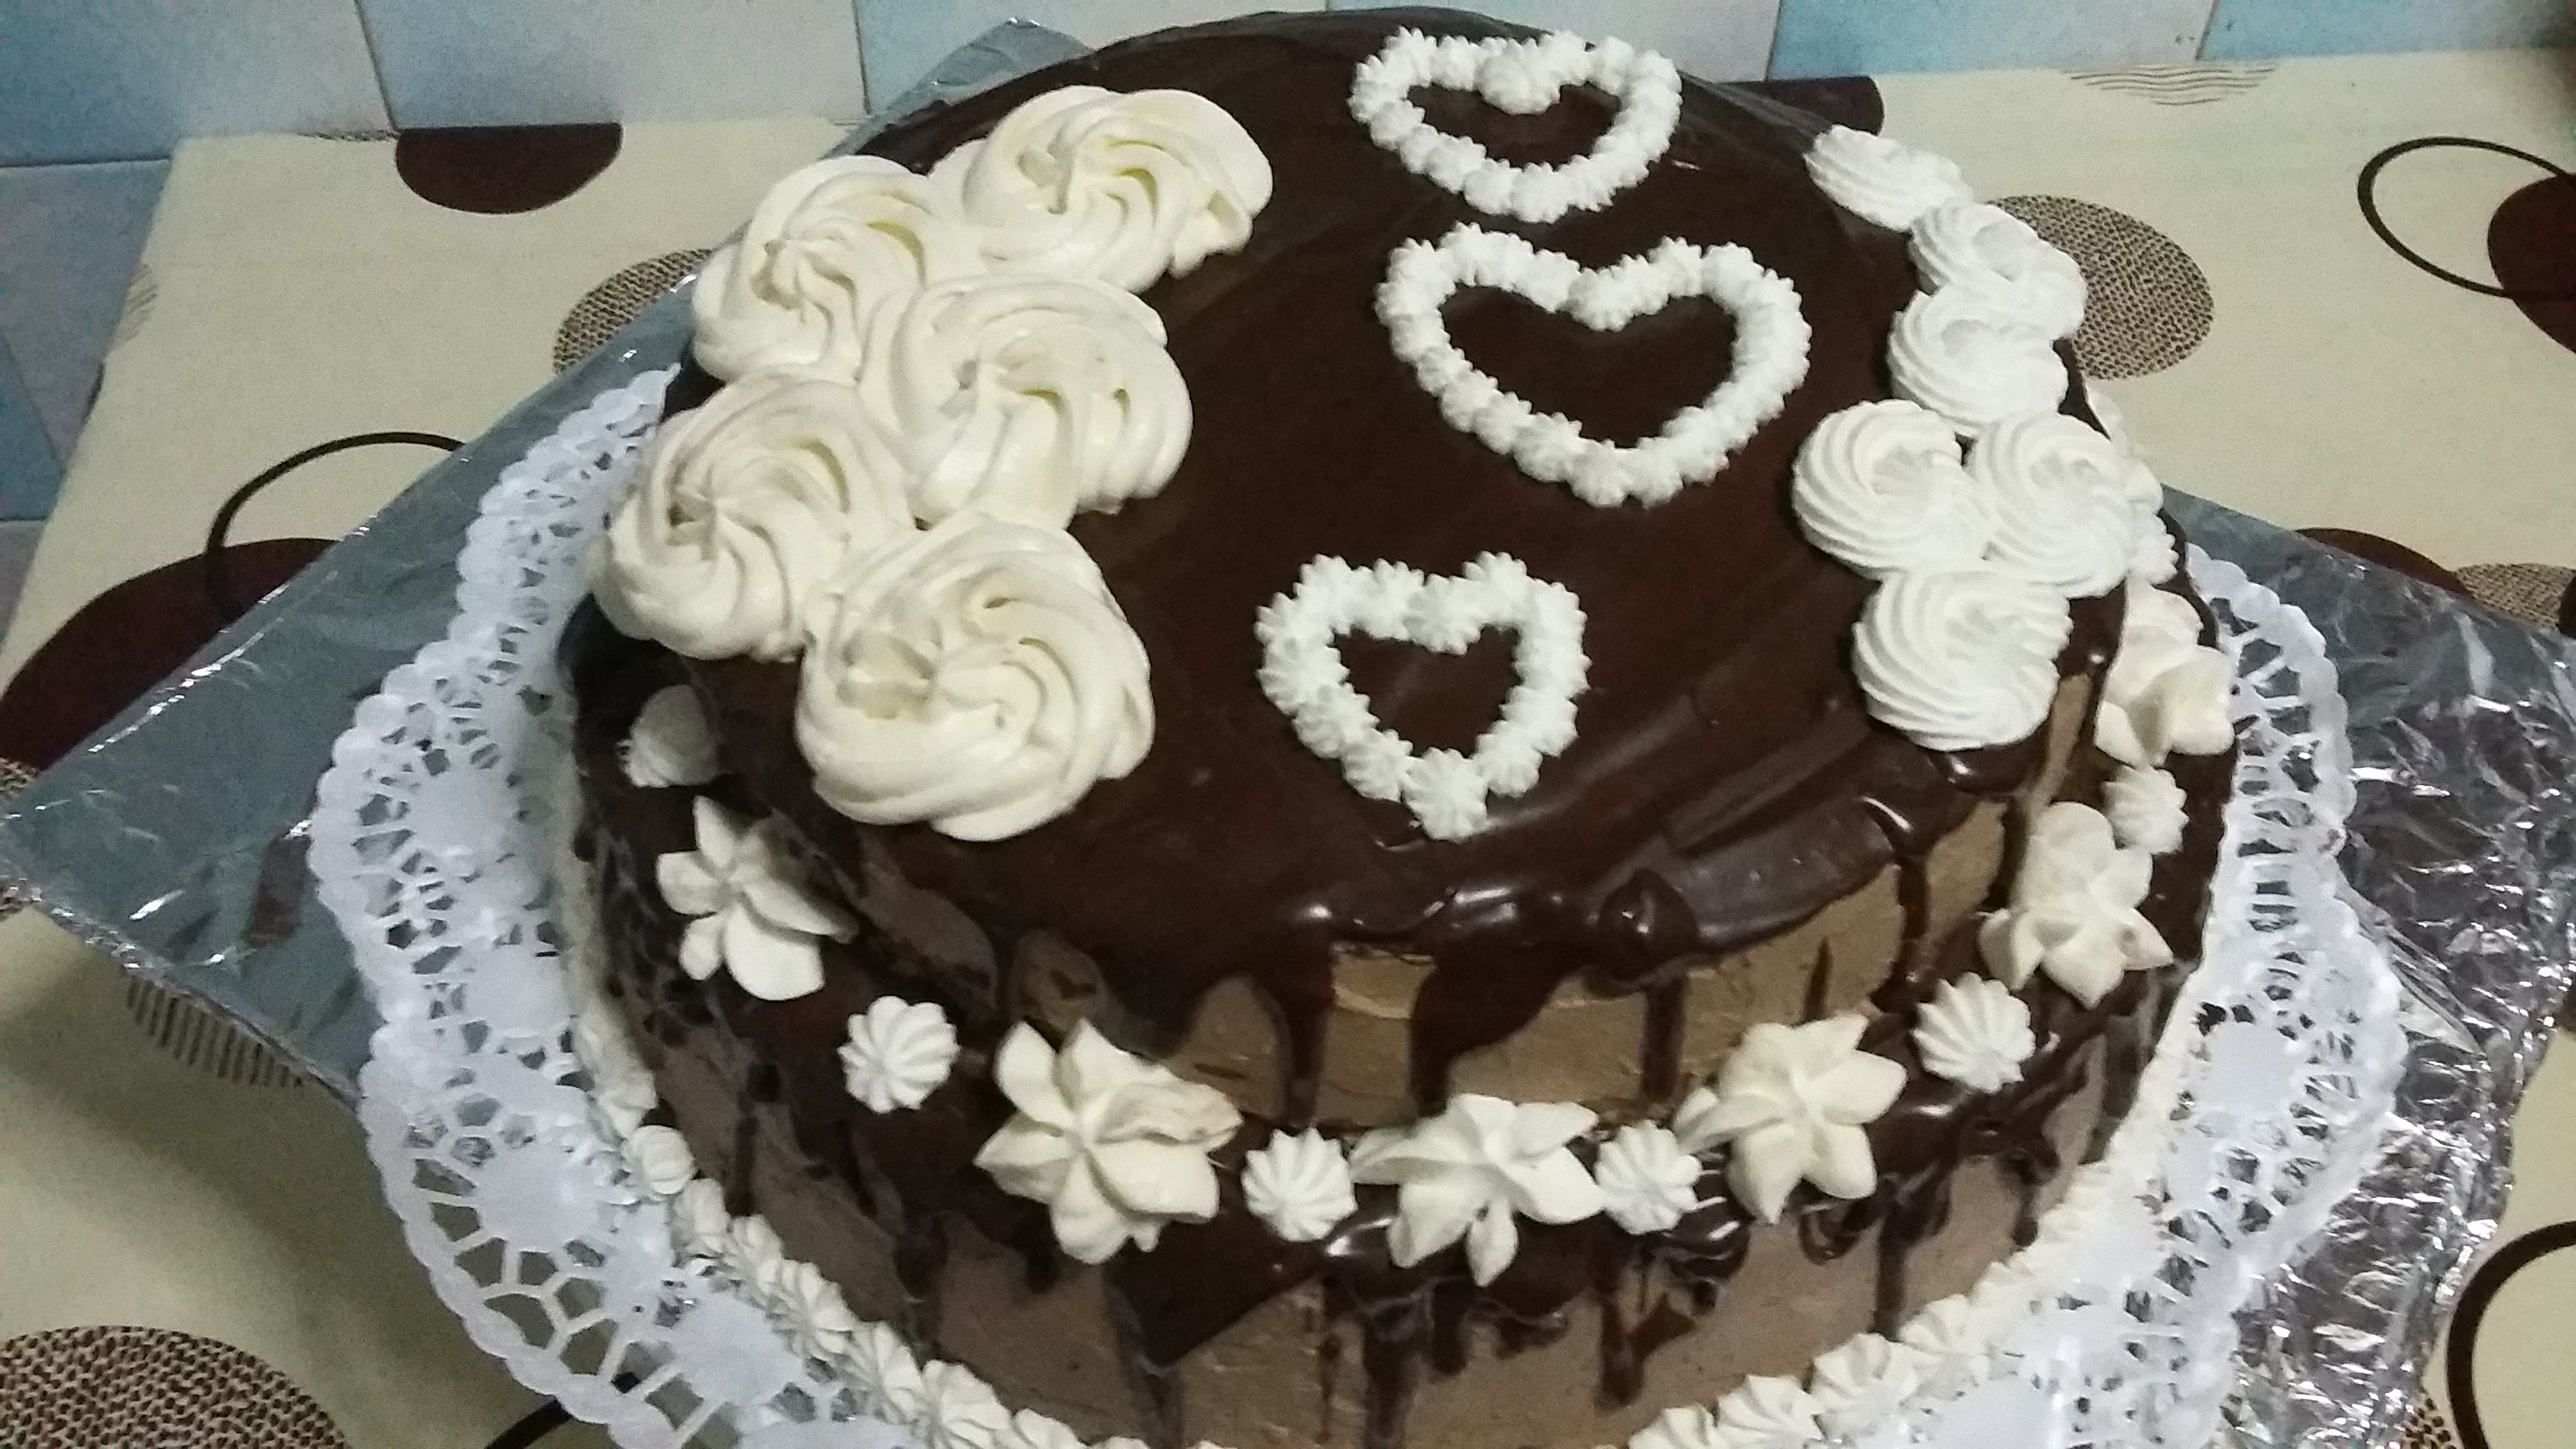 Desert tort cu crema de ciocolata neagra si alba si afine - Reteta nr. 600